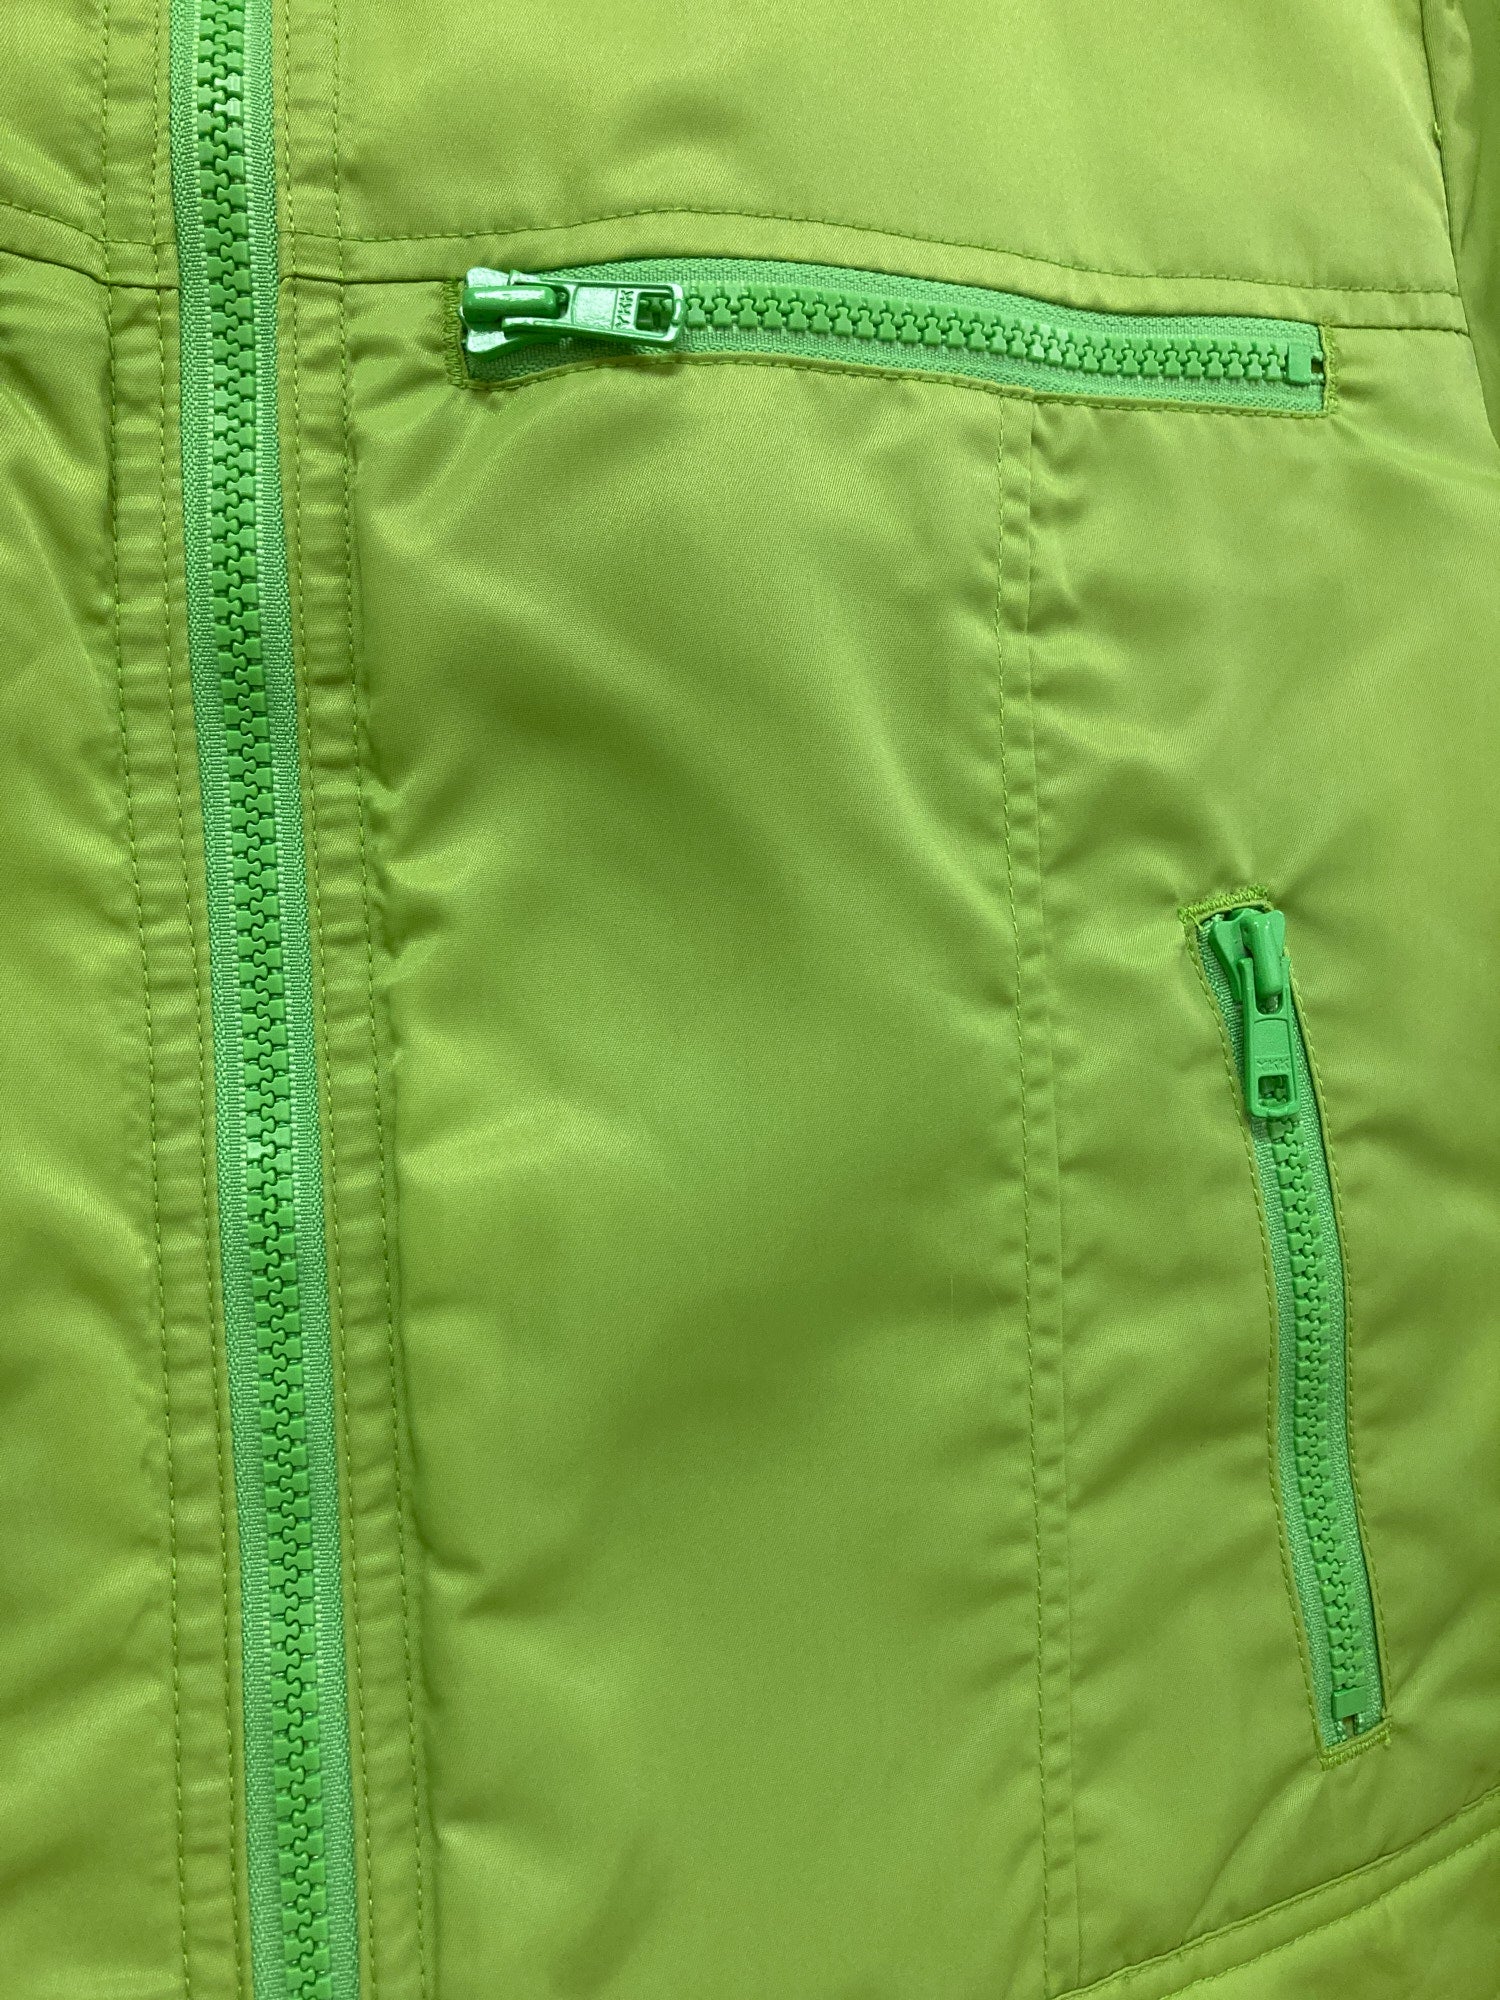 IS Sunao Kuwahara bright green padded nylon zip jacket - size M